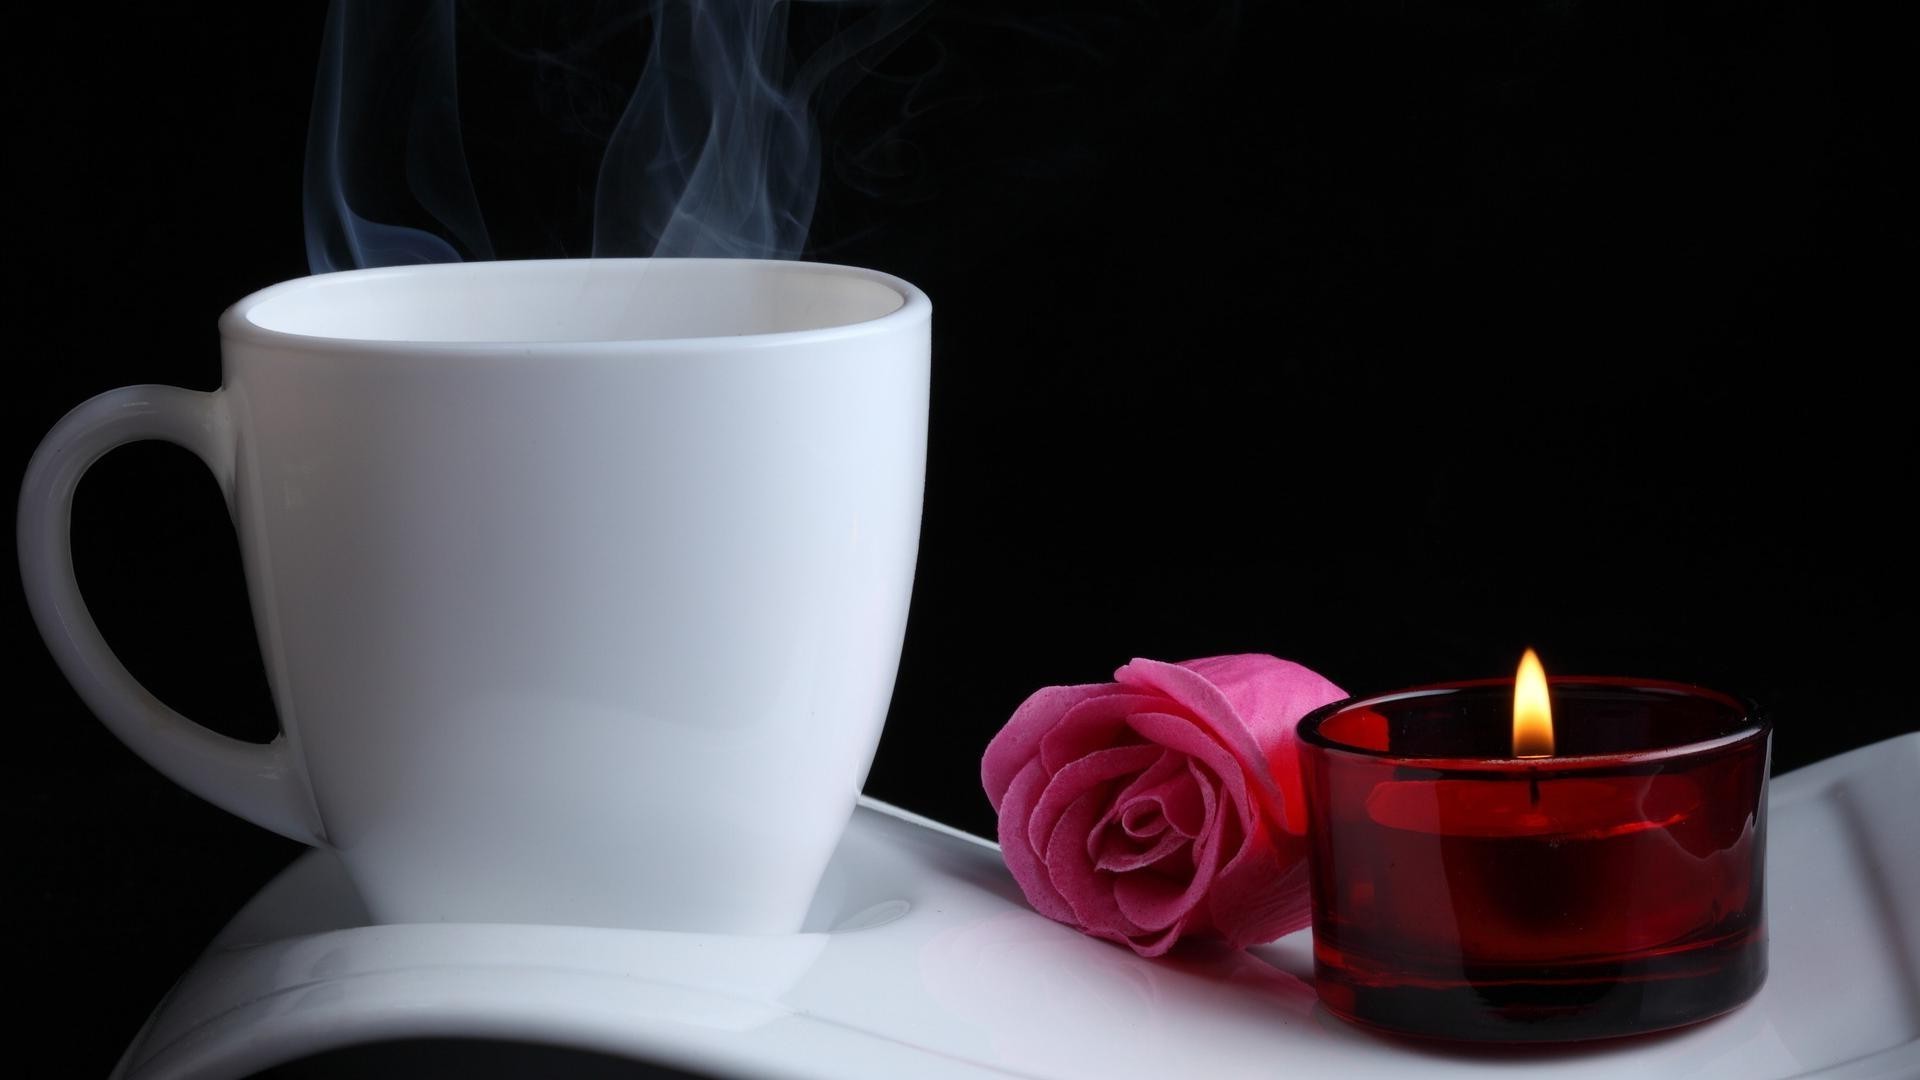 holidays coffee cup hot tea drink breakfast espresso dark dawn caffeine cappuccino still life mug porcelain teacup